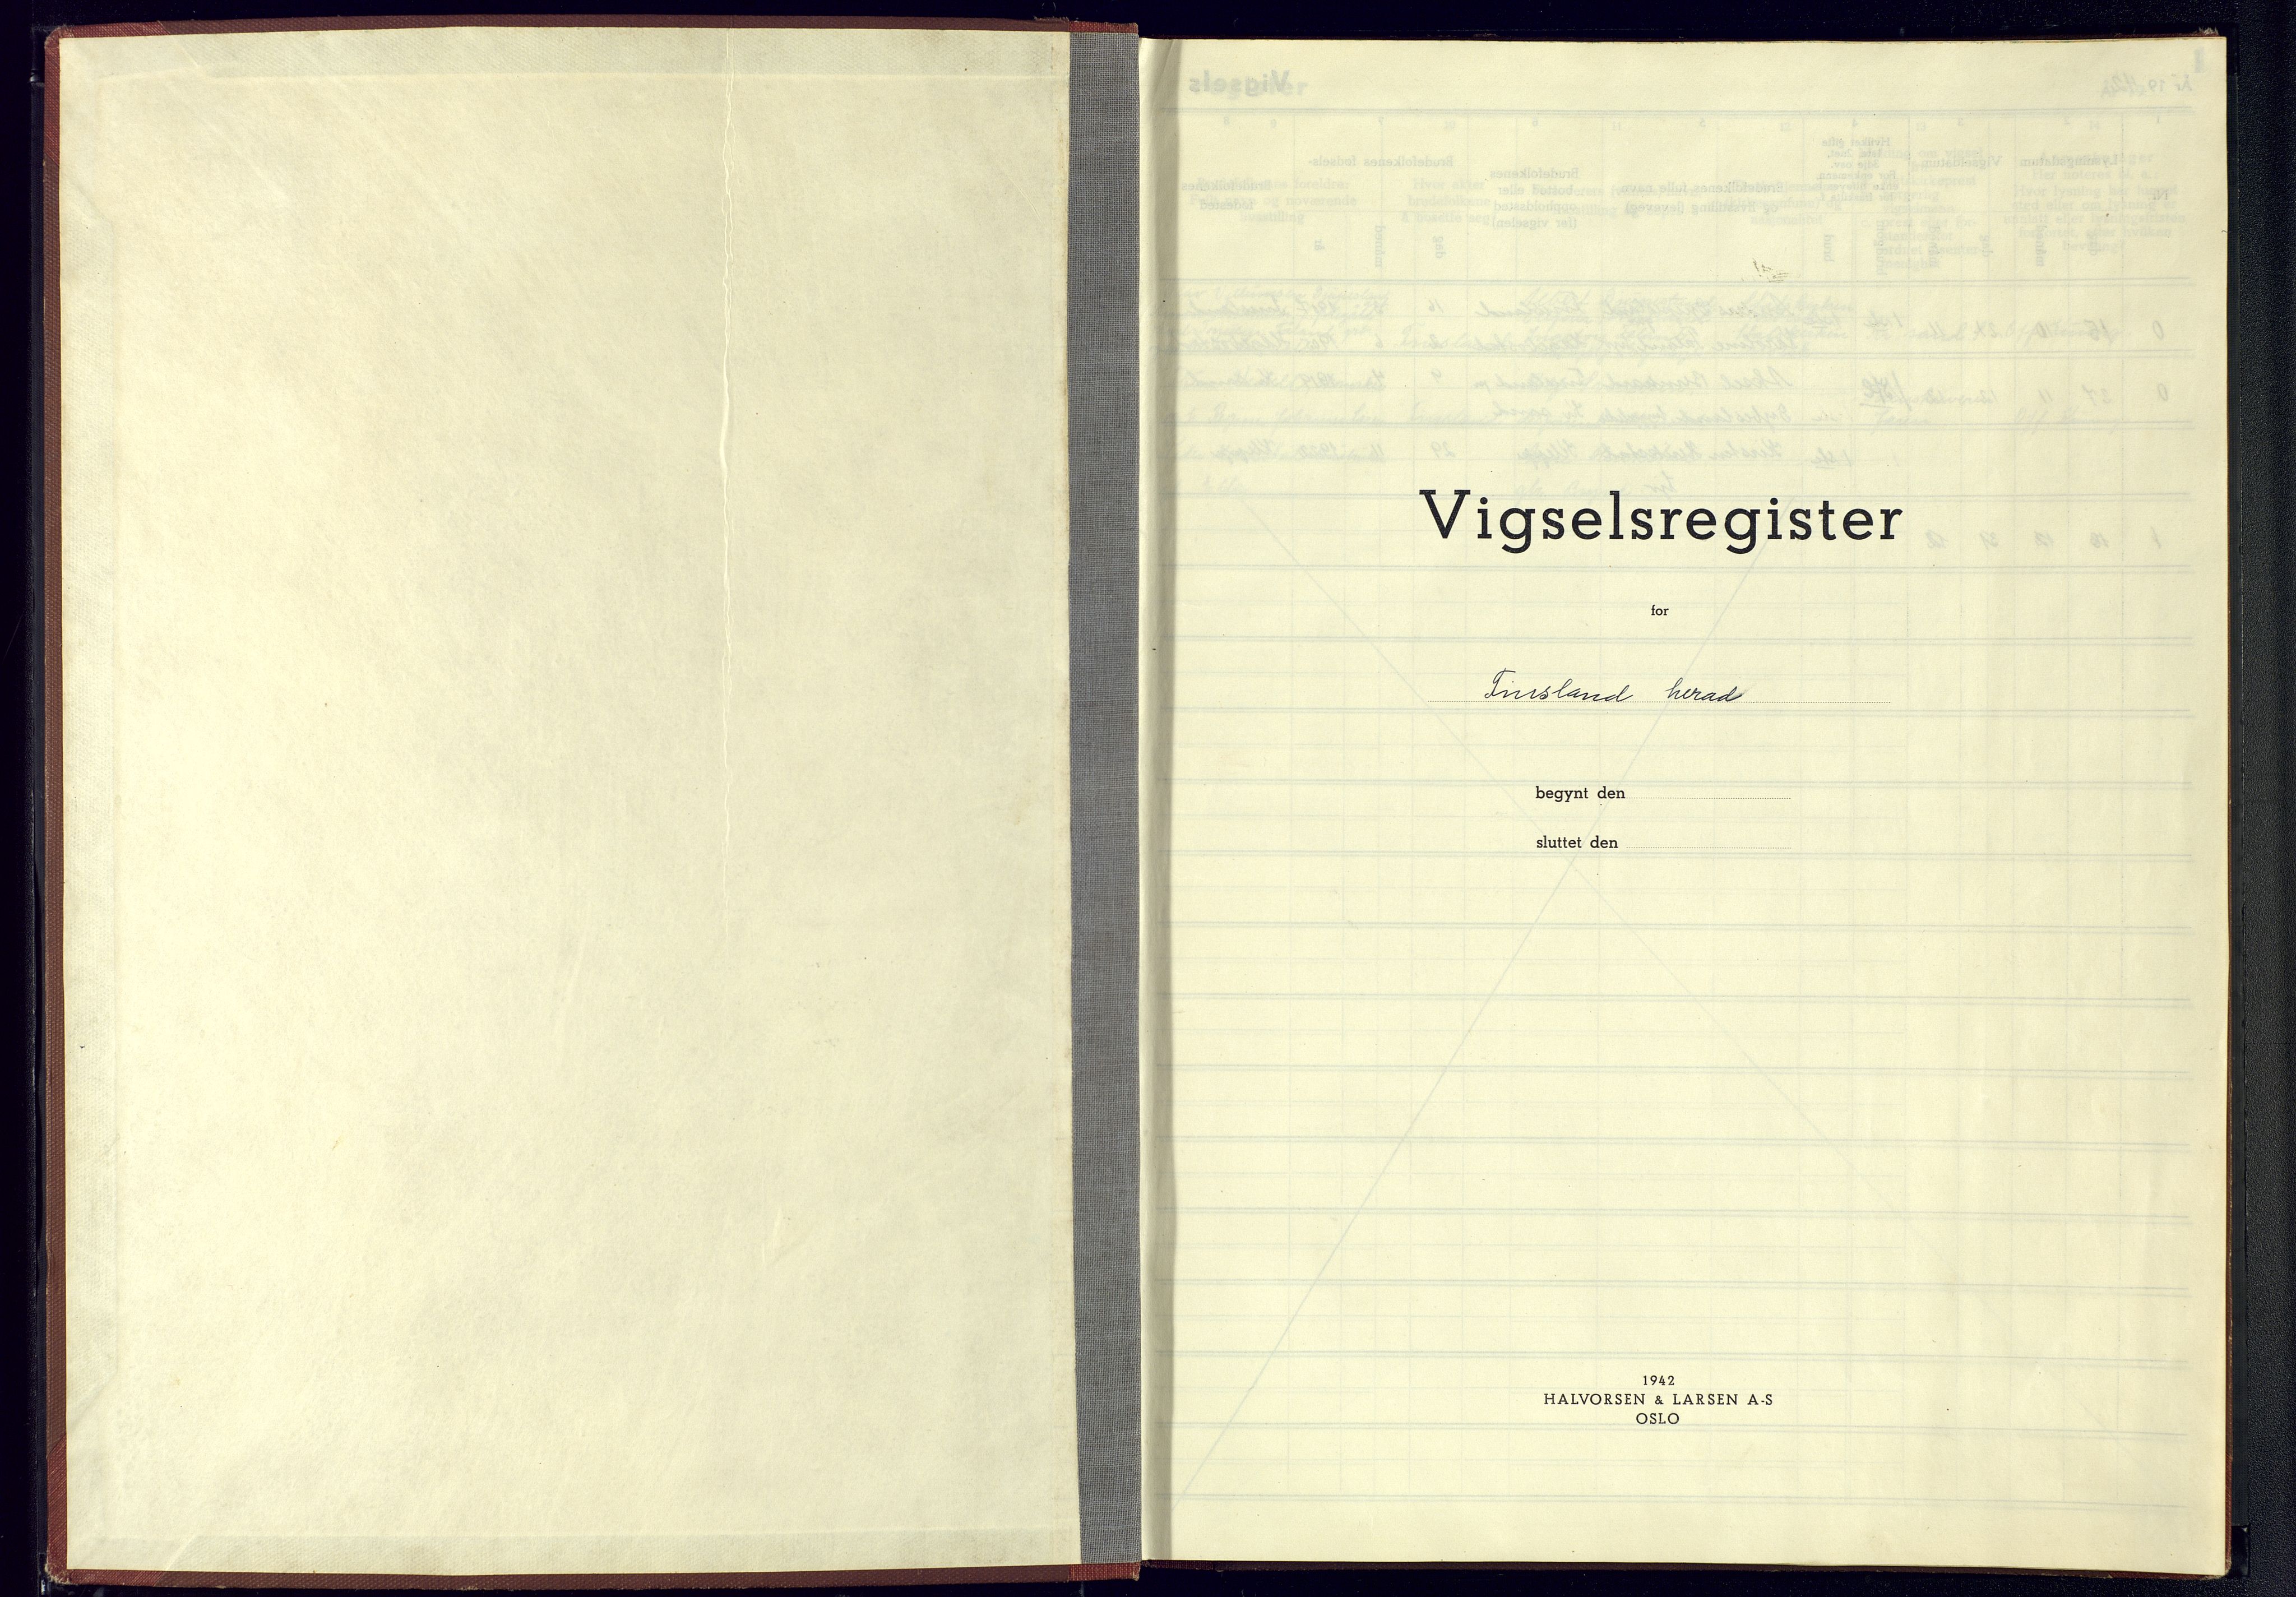 Bjelland sokneprestkontor, SAK/1111-0005/J/Jb/L0009: Vigselsregister nr. II.6.9, 1942-1956